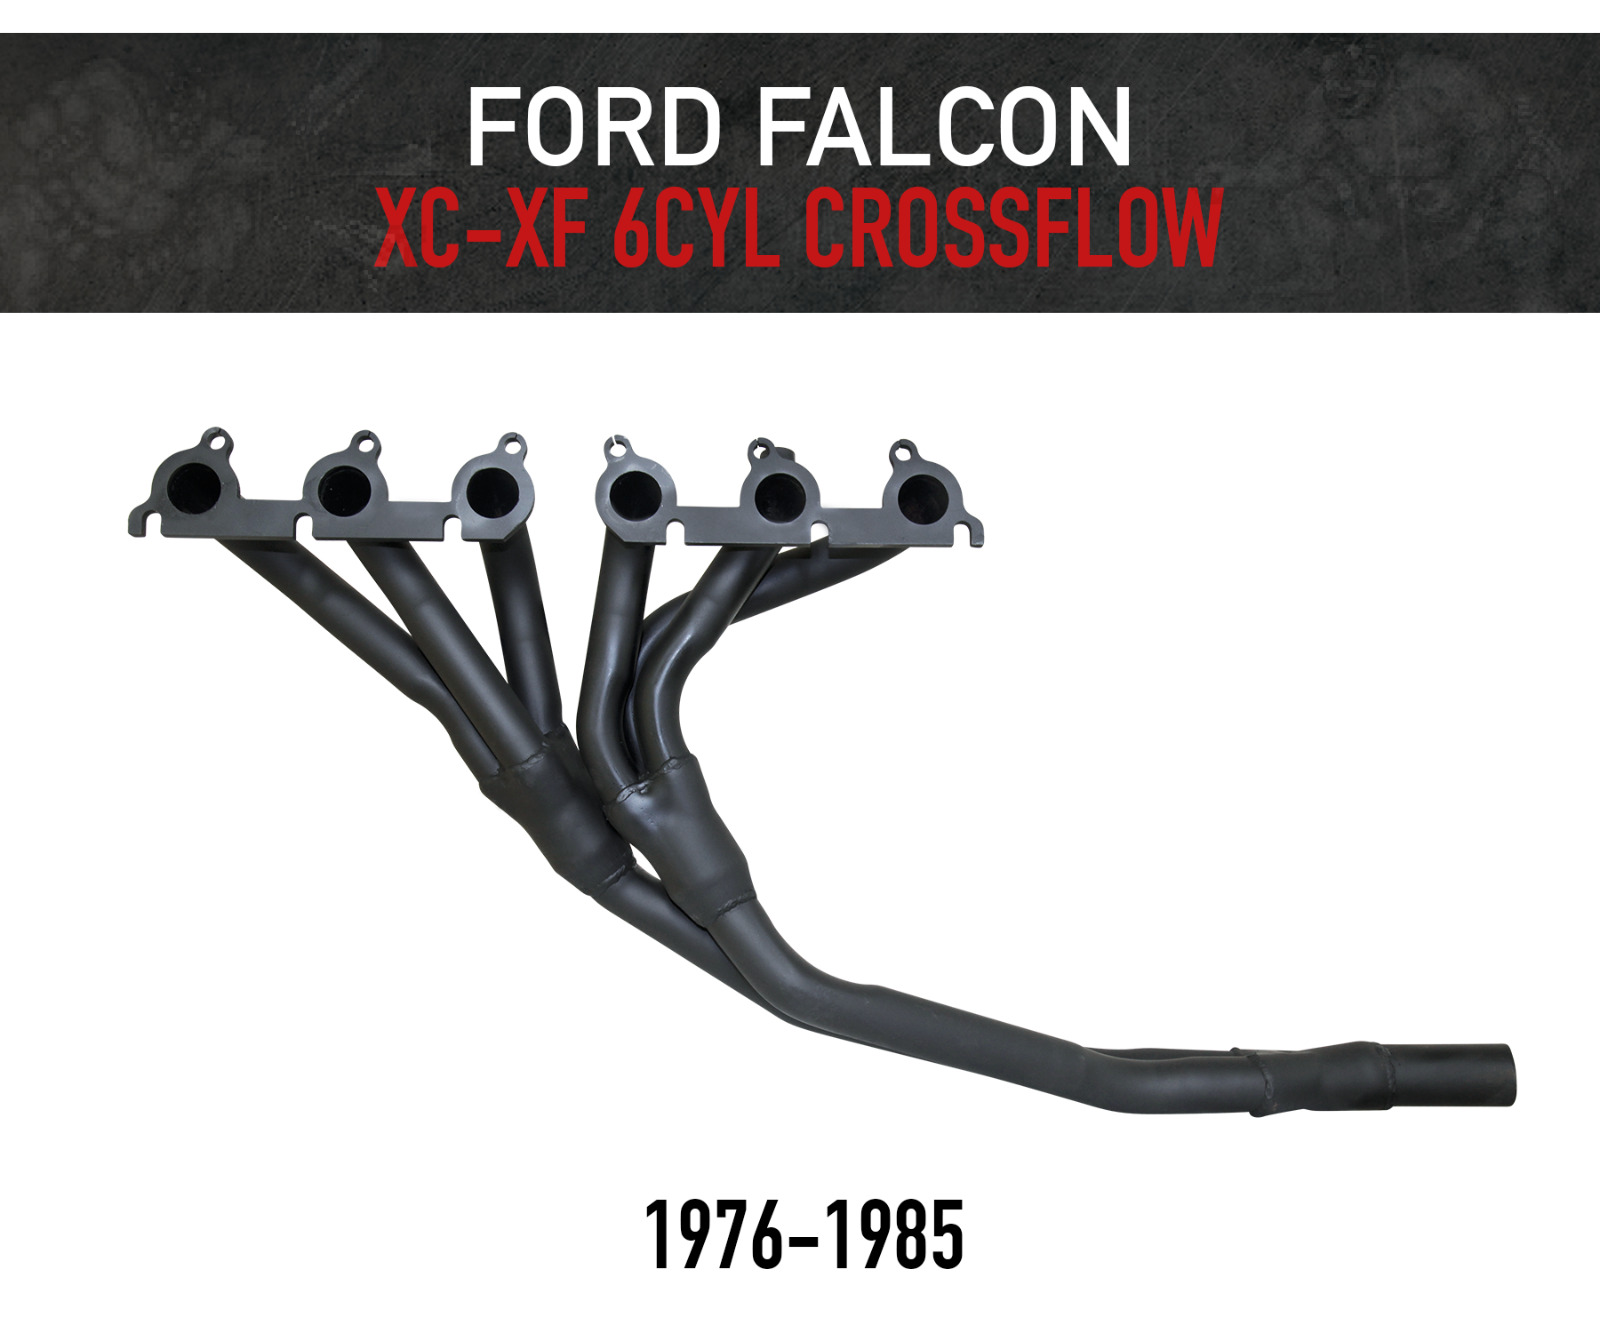 Headers / Extractors for Ford Falcon XC-XF 4.1L Alloy Head Crossflow (X-Flo)